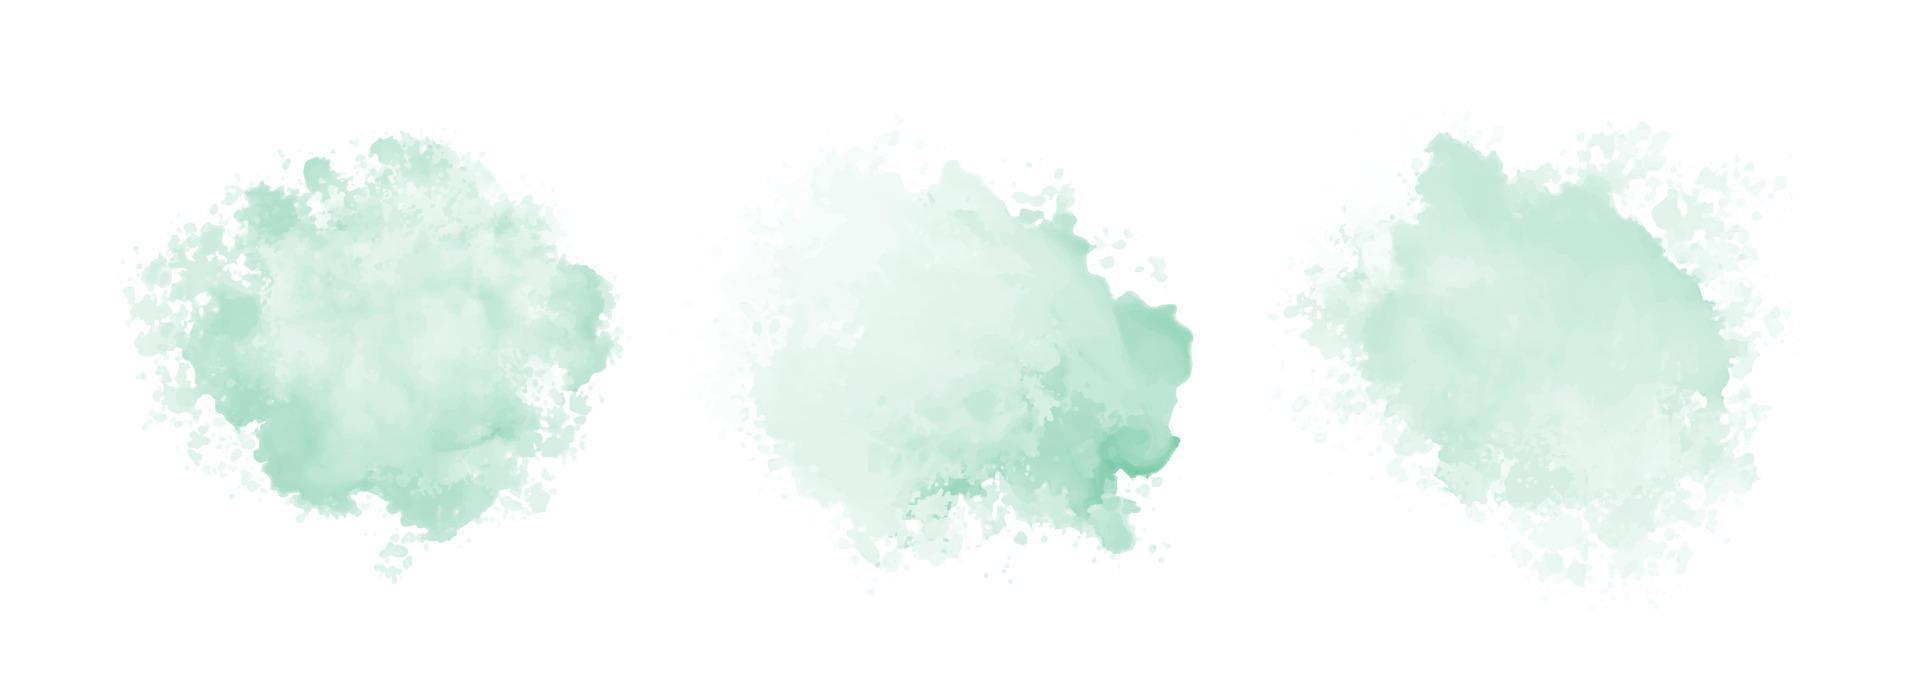 conjunto de salpicaduras de agua de acuarela verde menta abstracta sobre un fondo blanco vector